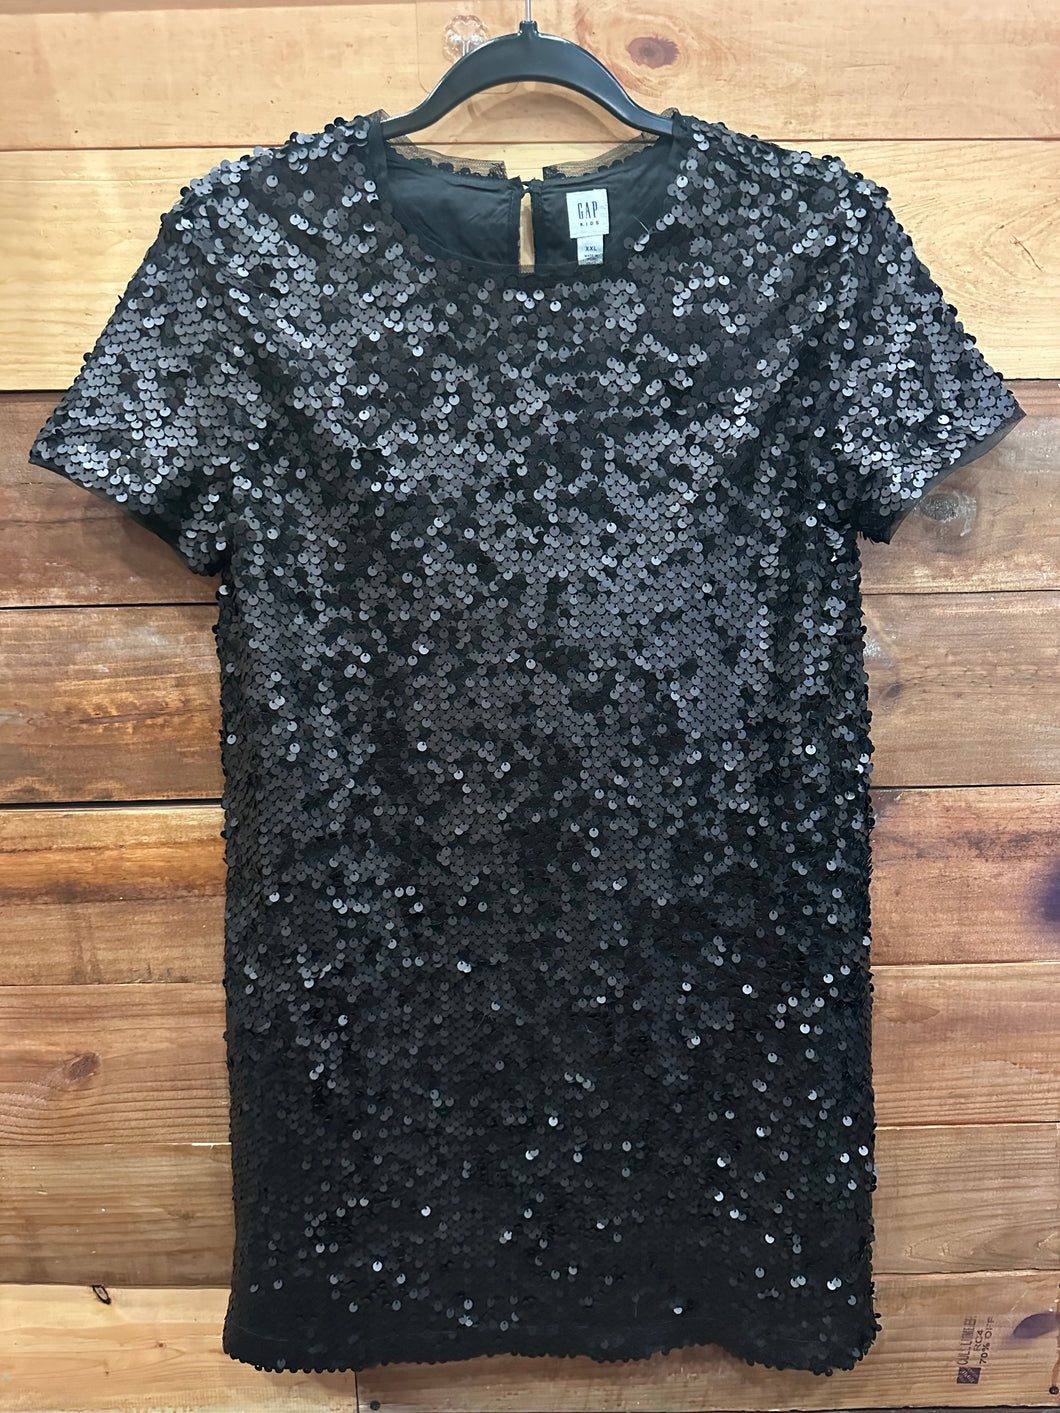 Gap Black Sequin Dress Size 13